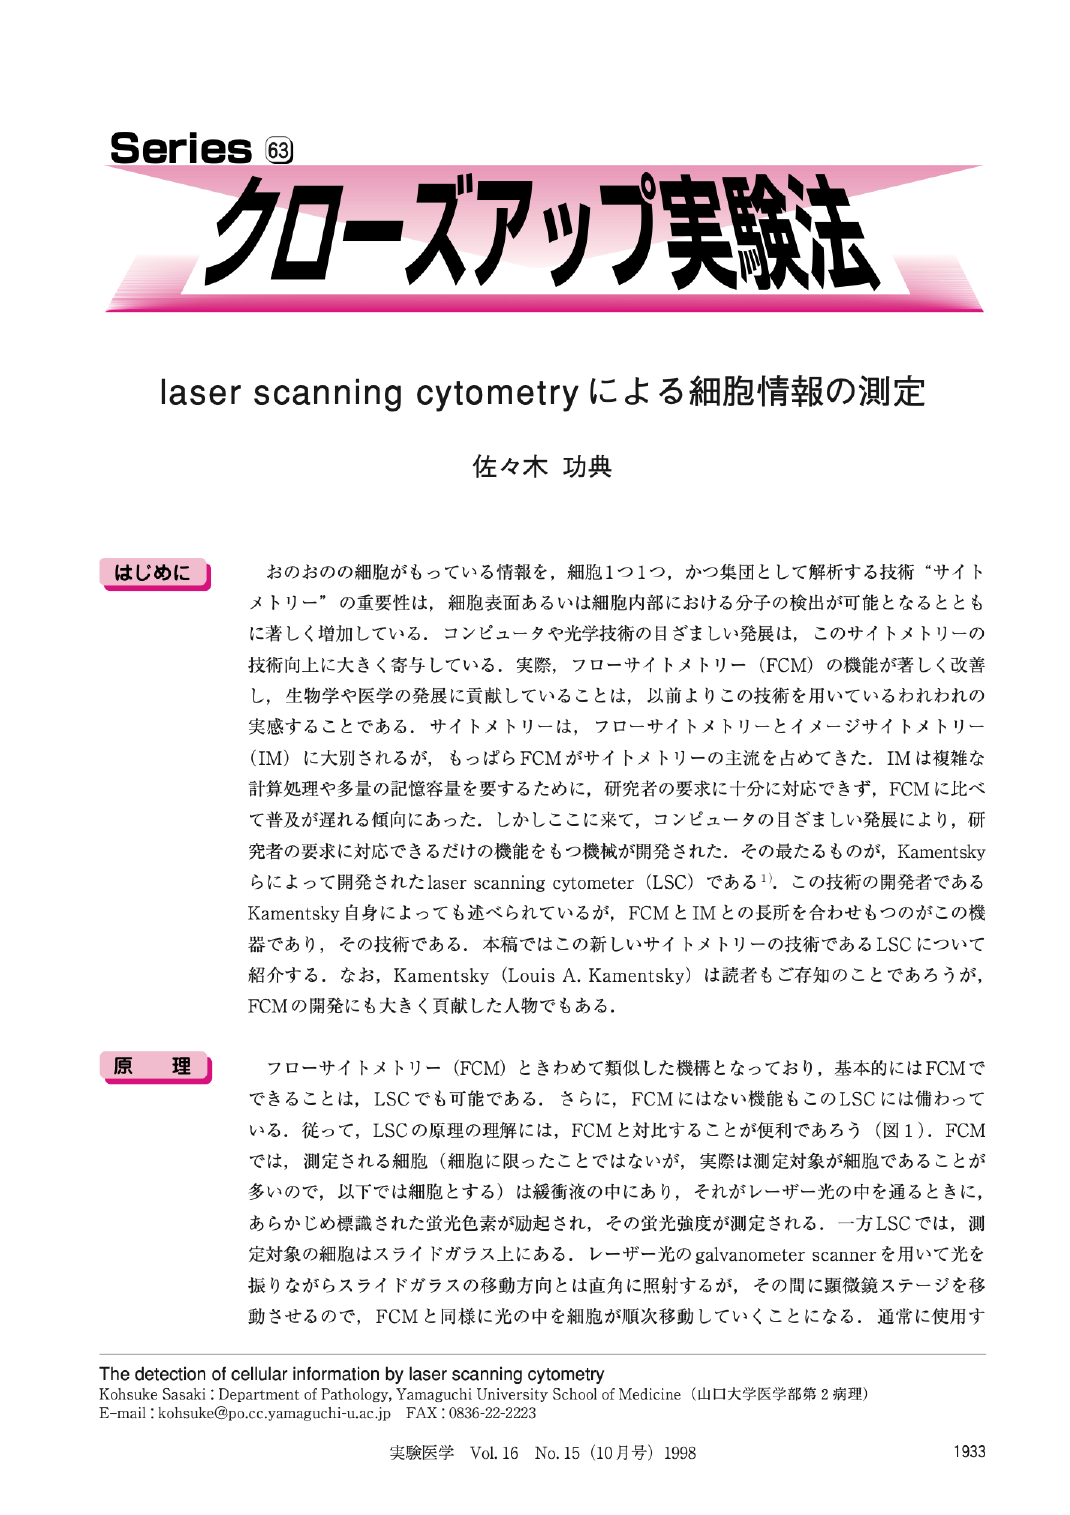 laser scanning cytometryによる細胞情報の測定